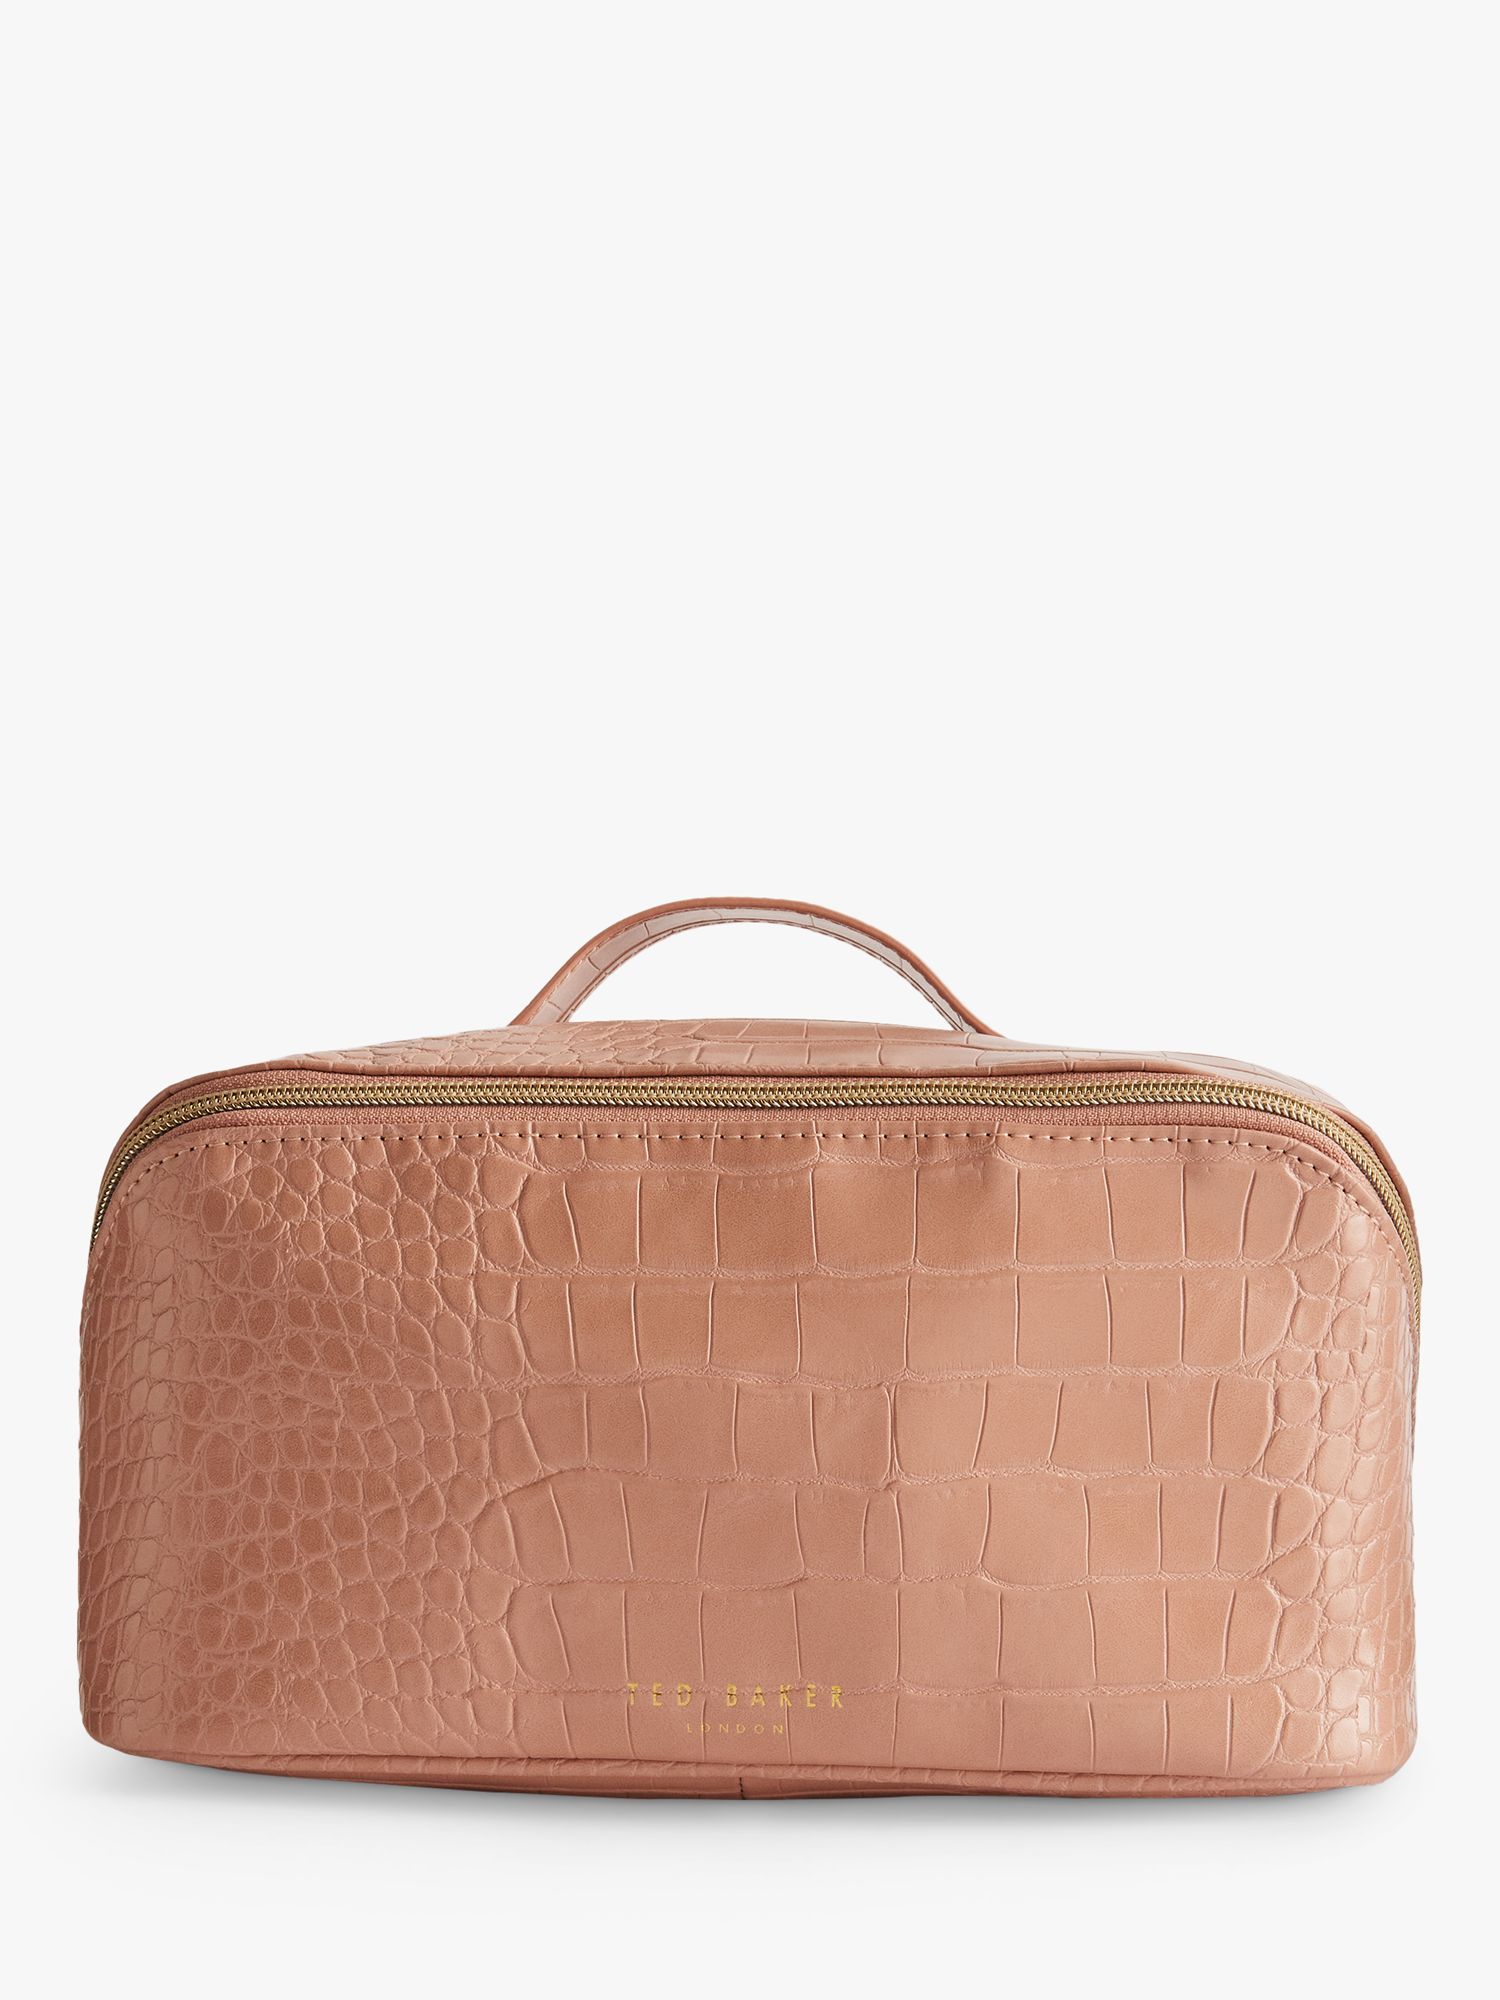 Ted Baker Haanas Croc Effect Large Wash Bag, Pink, One Size